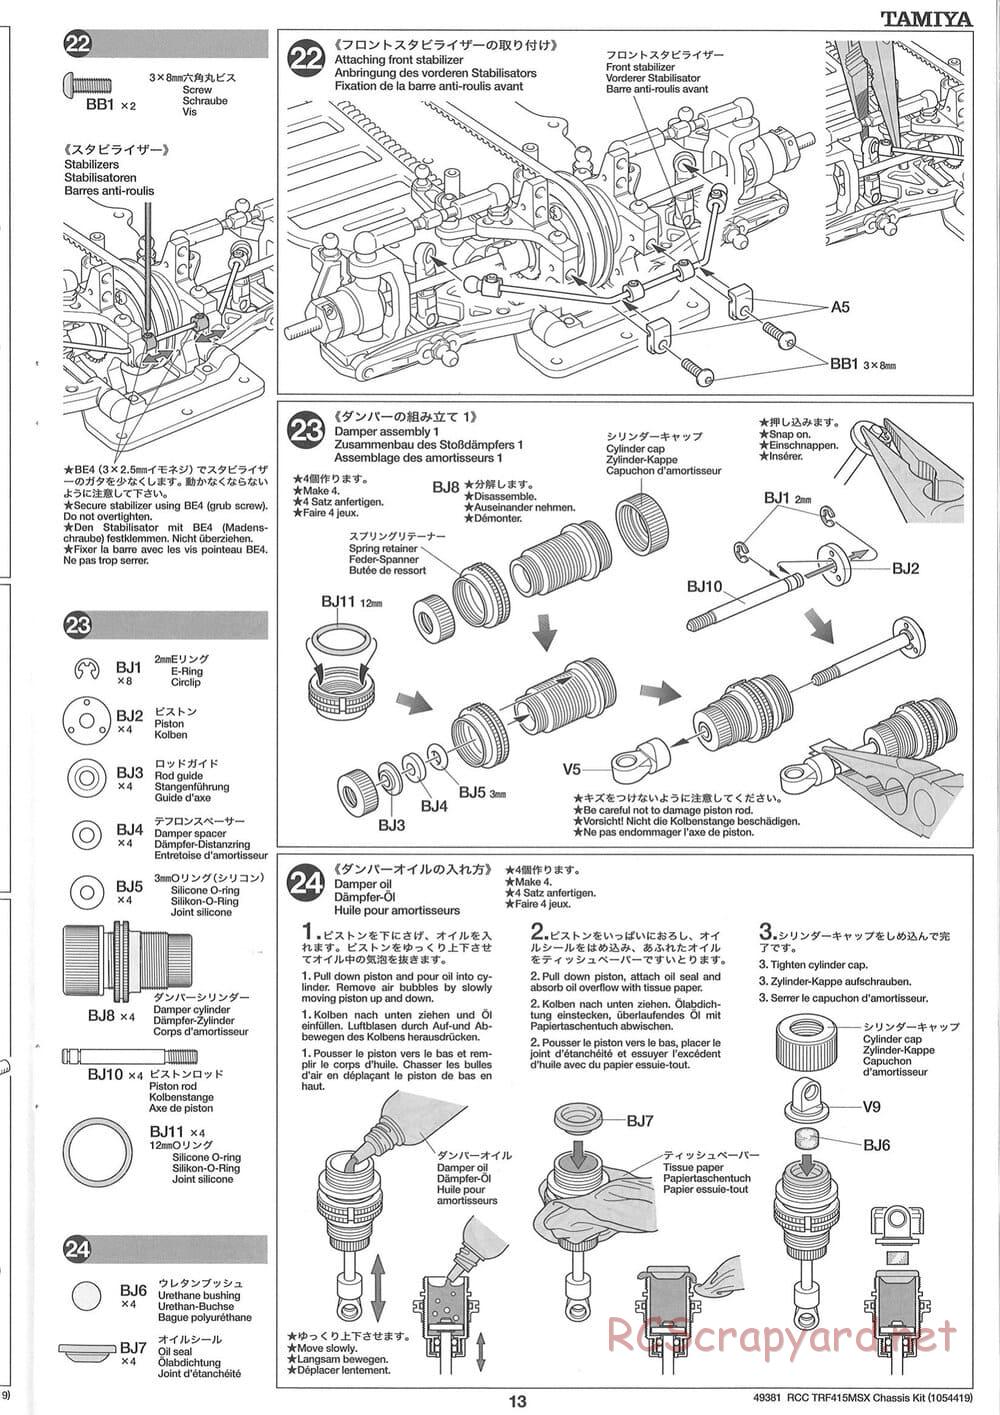 Tamiya - TRF415-MSX Chassis - Manual - Page 13